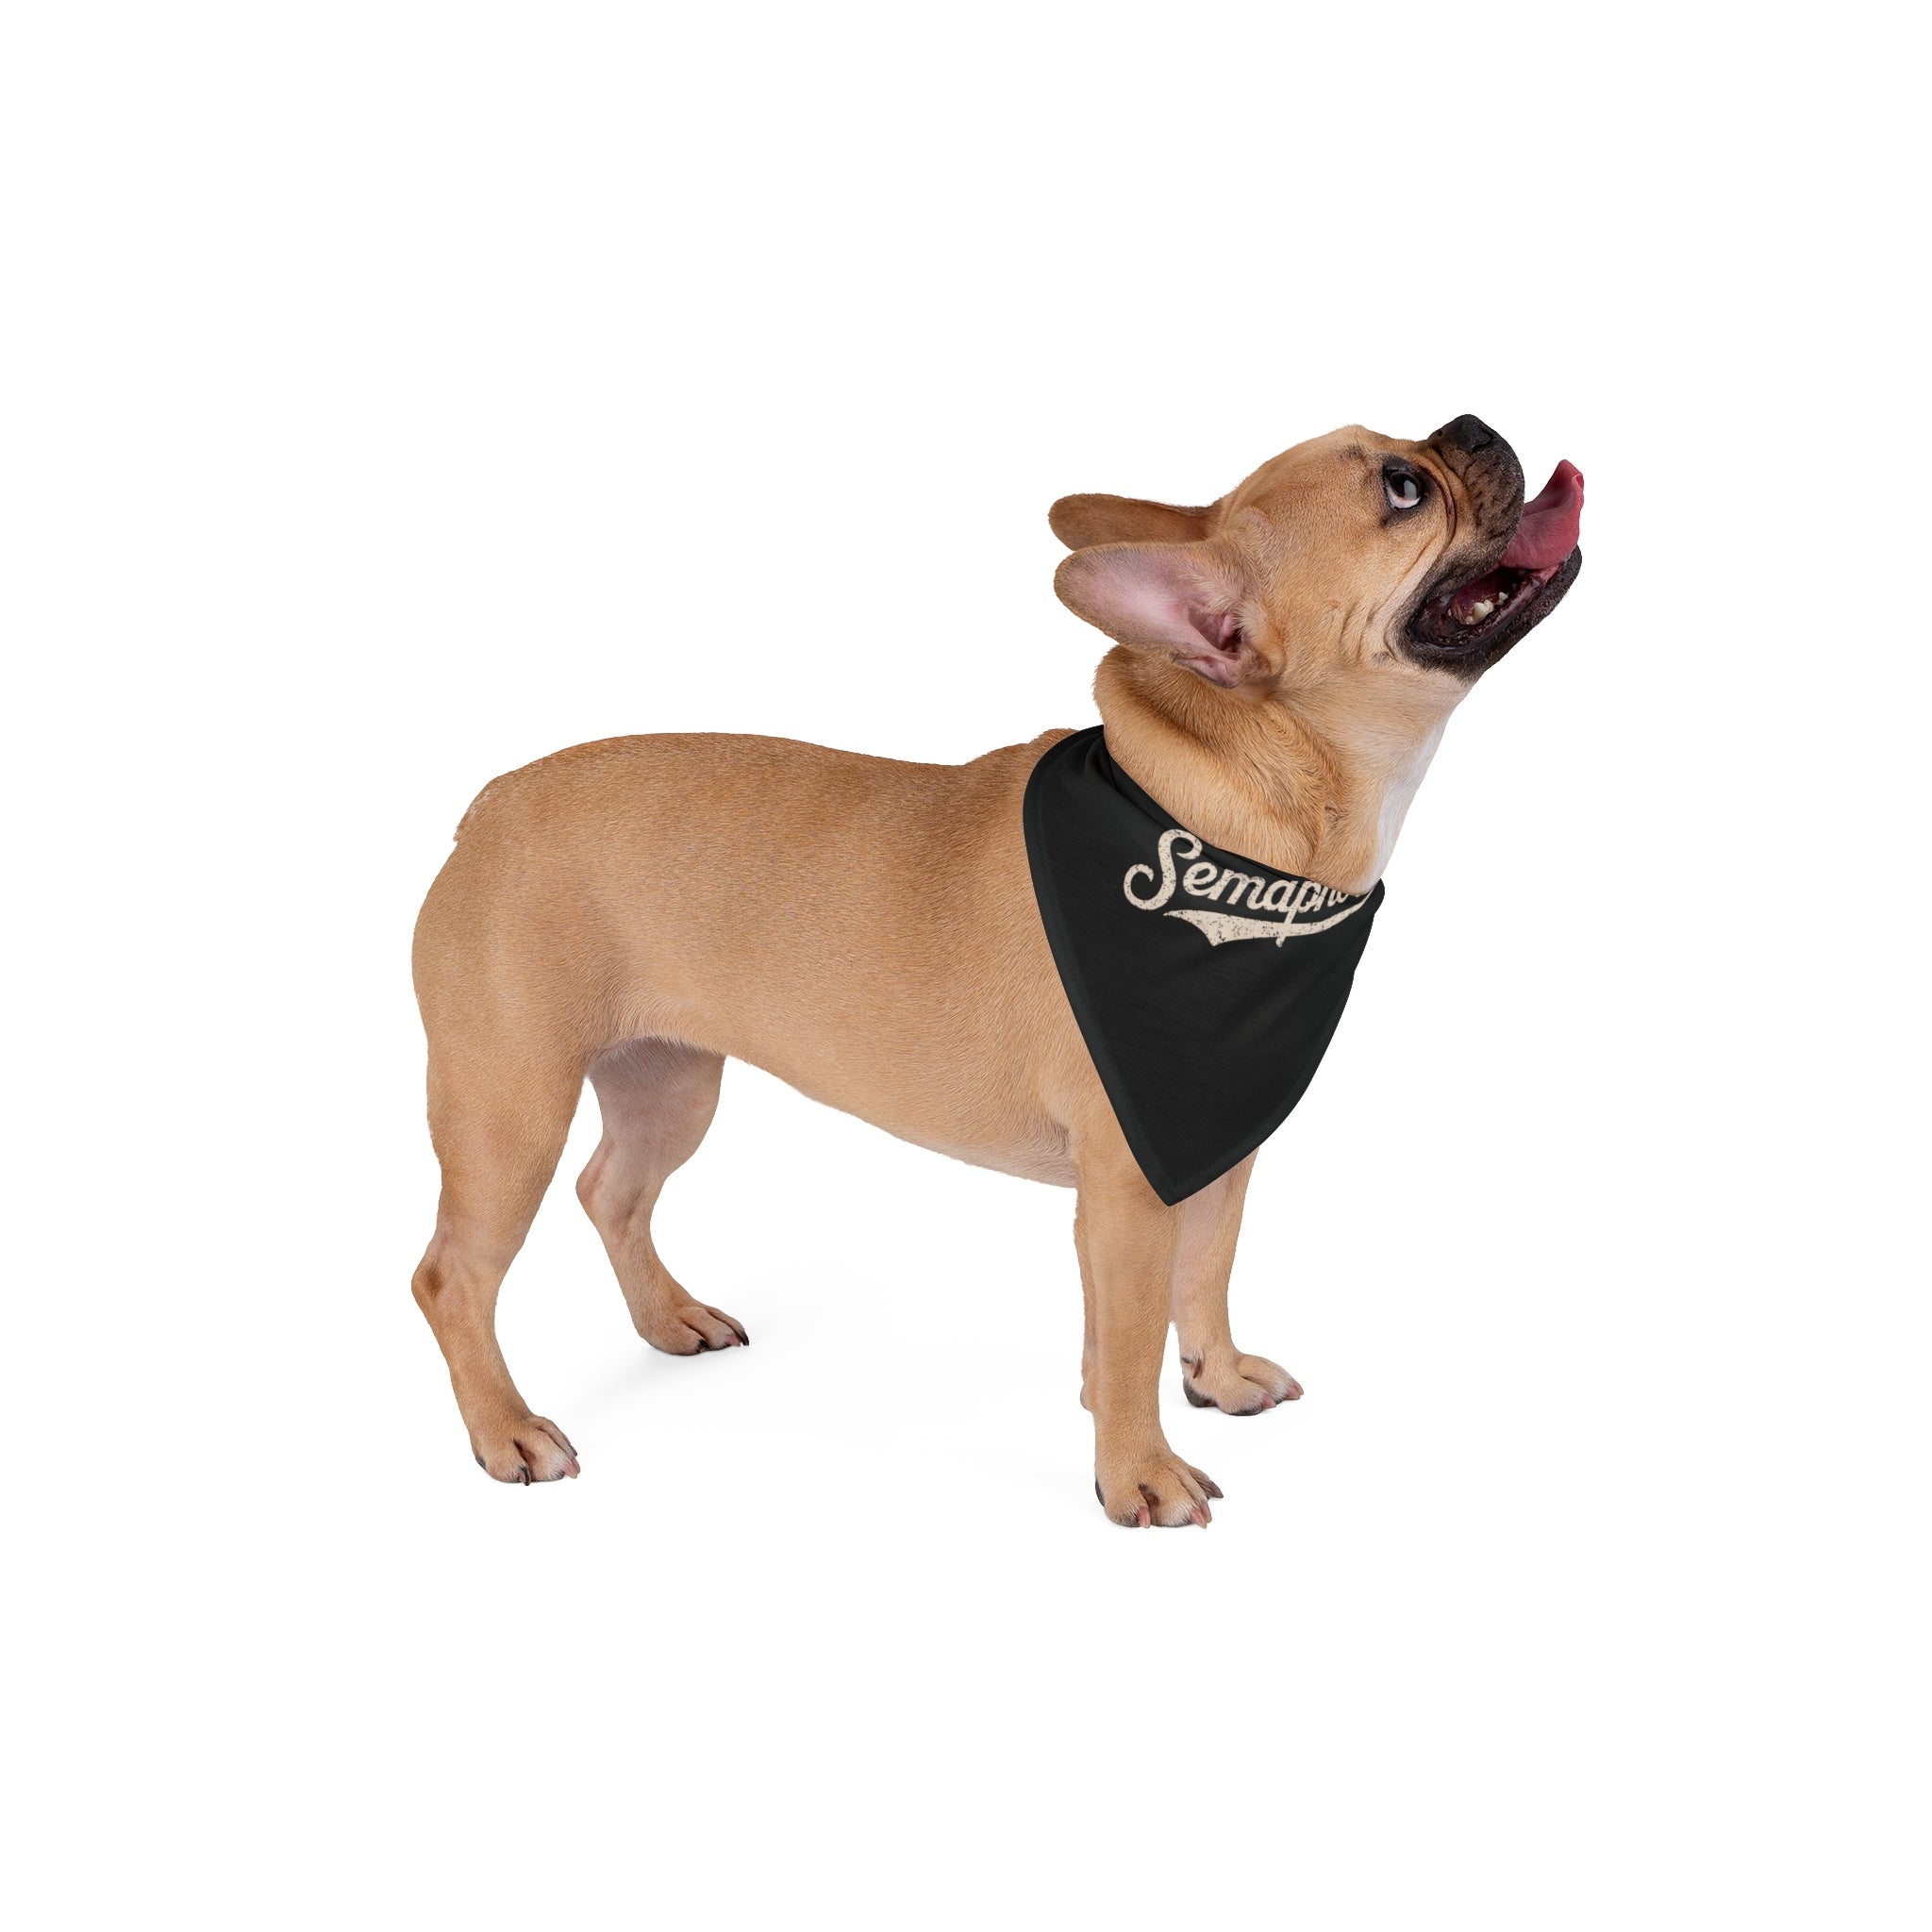 A tan French Bulldog wearing a fun Semaphore - Pet Bandana looks upwards.